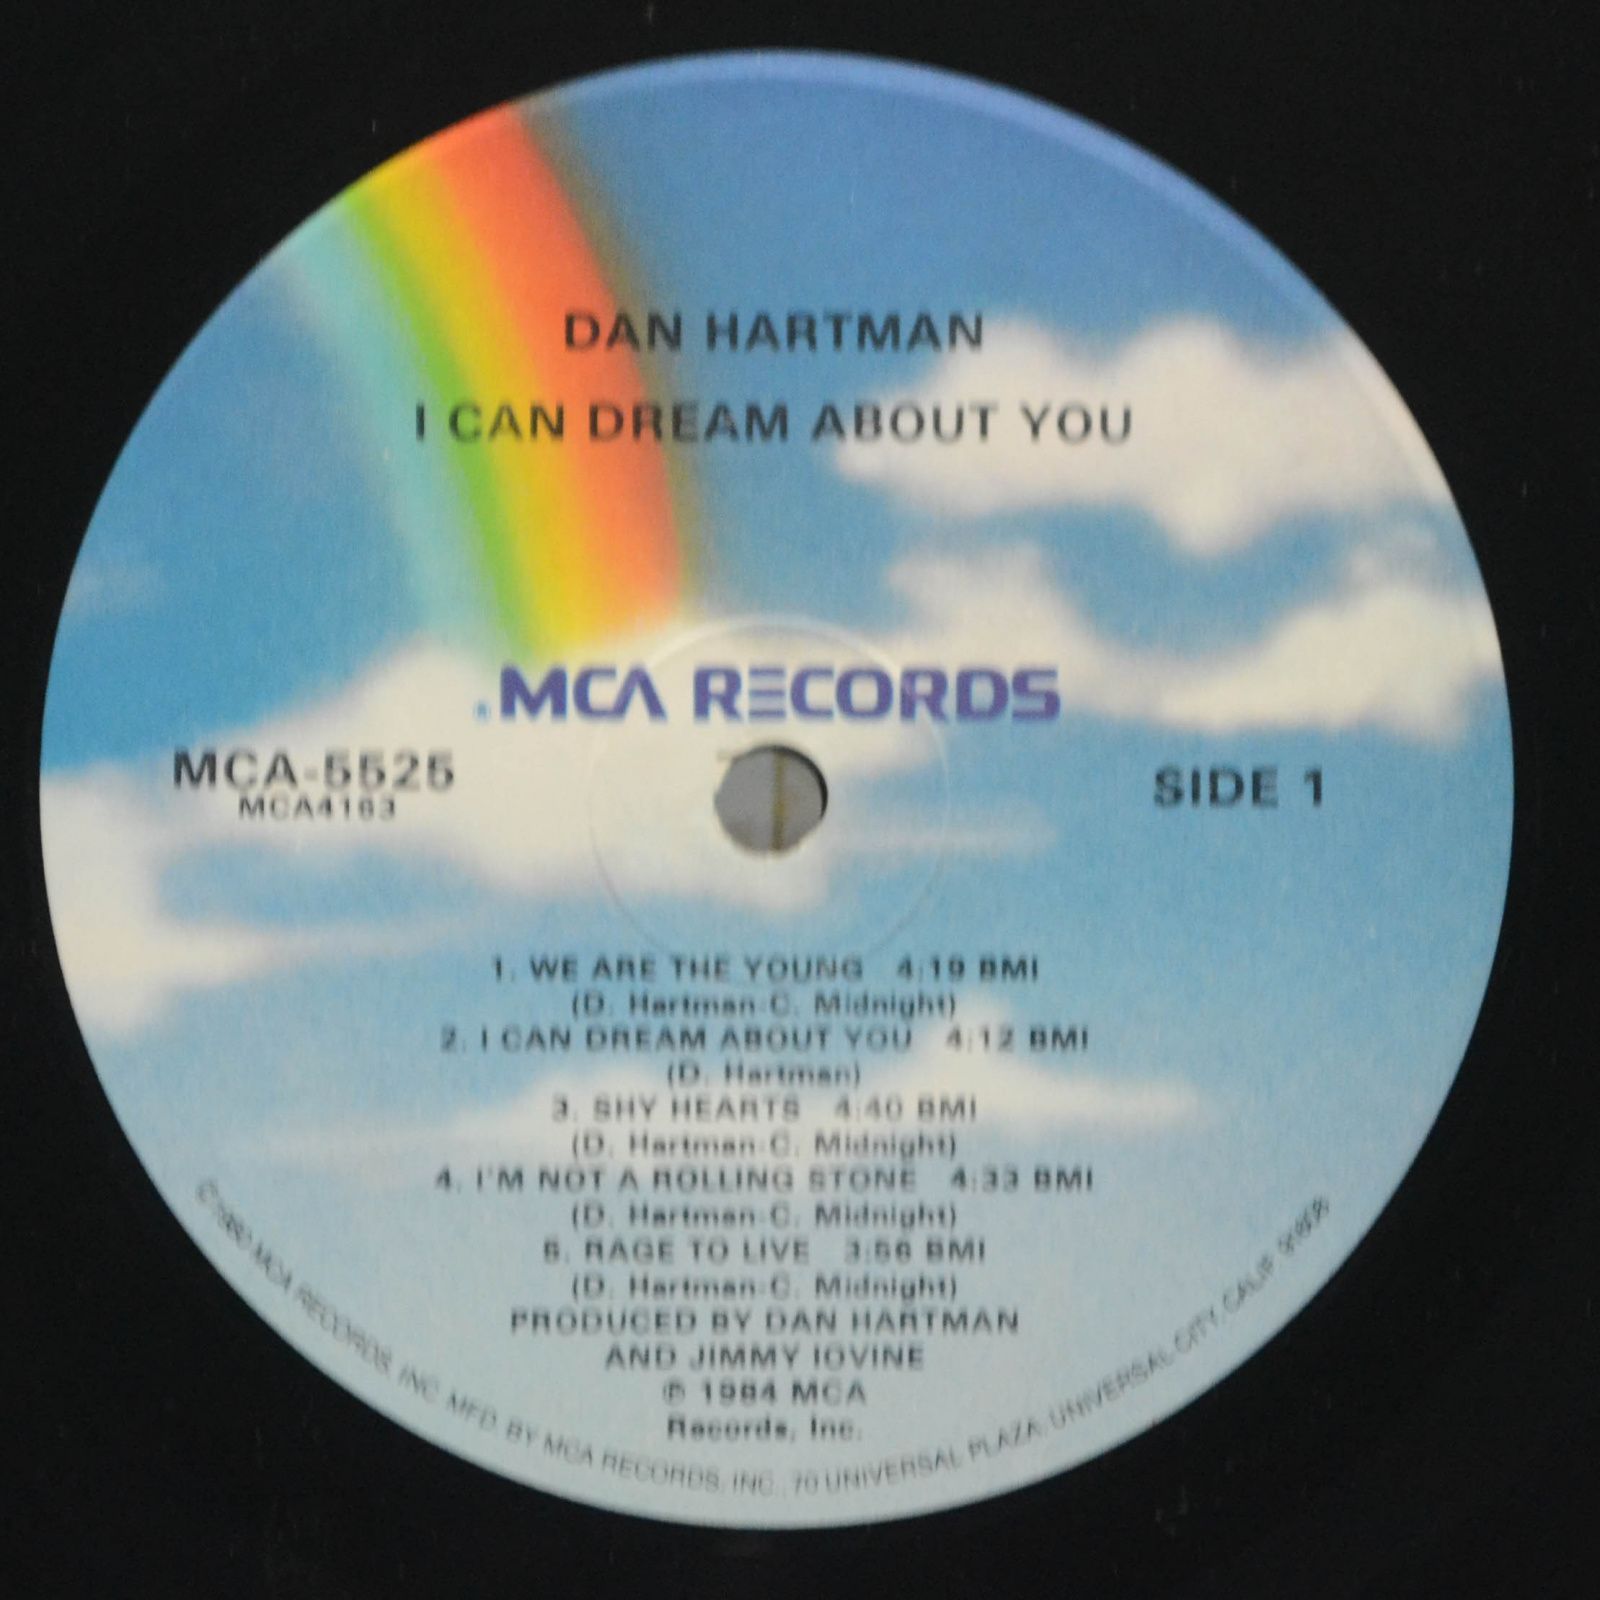 Dan Hartman — I Can Dream About You, 1984